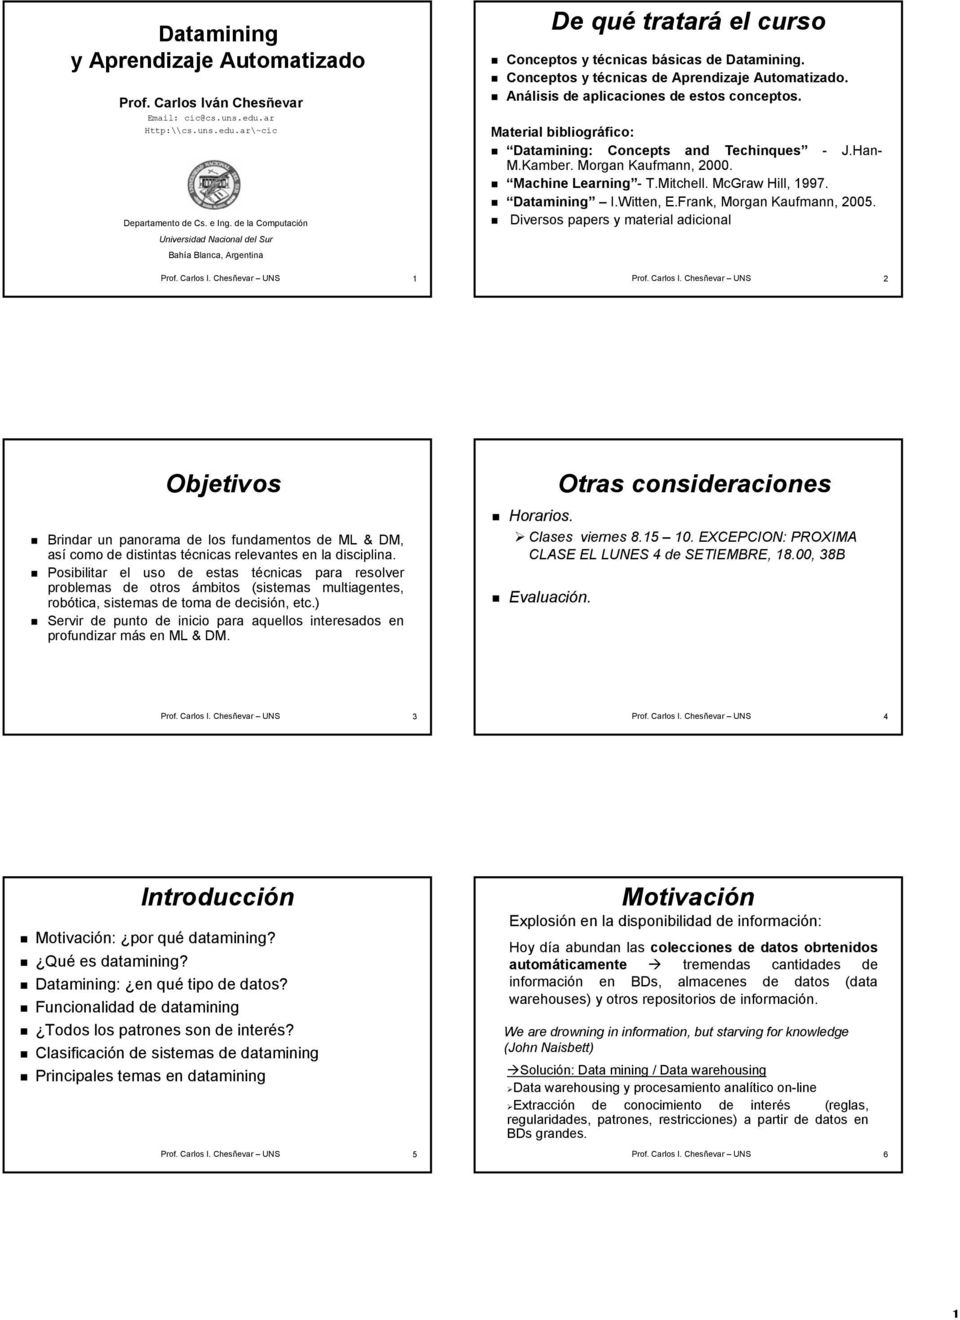 Conceptos y técnicas de Aprendizaje Automatizado. Análisis de aplicaciones de estos conceptos. Material bibliográfico: Datamining: Concepts and Techinques - J.Han- M.Kamber. Morgan Kaufmann, 2000.